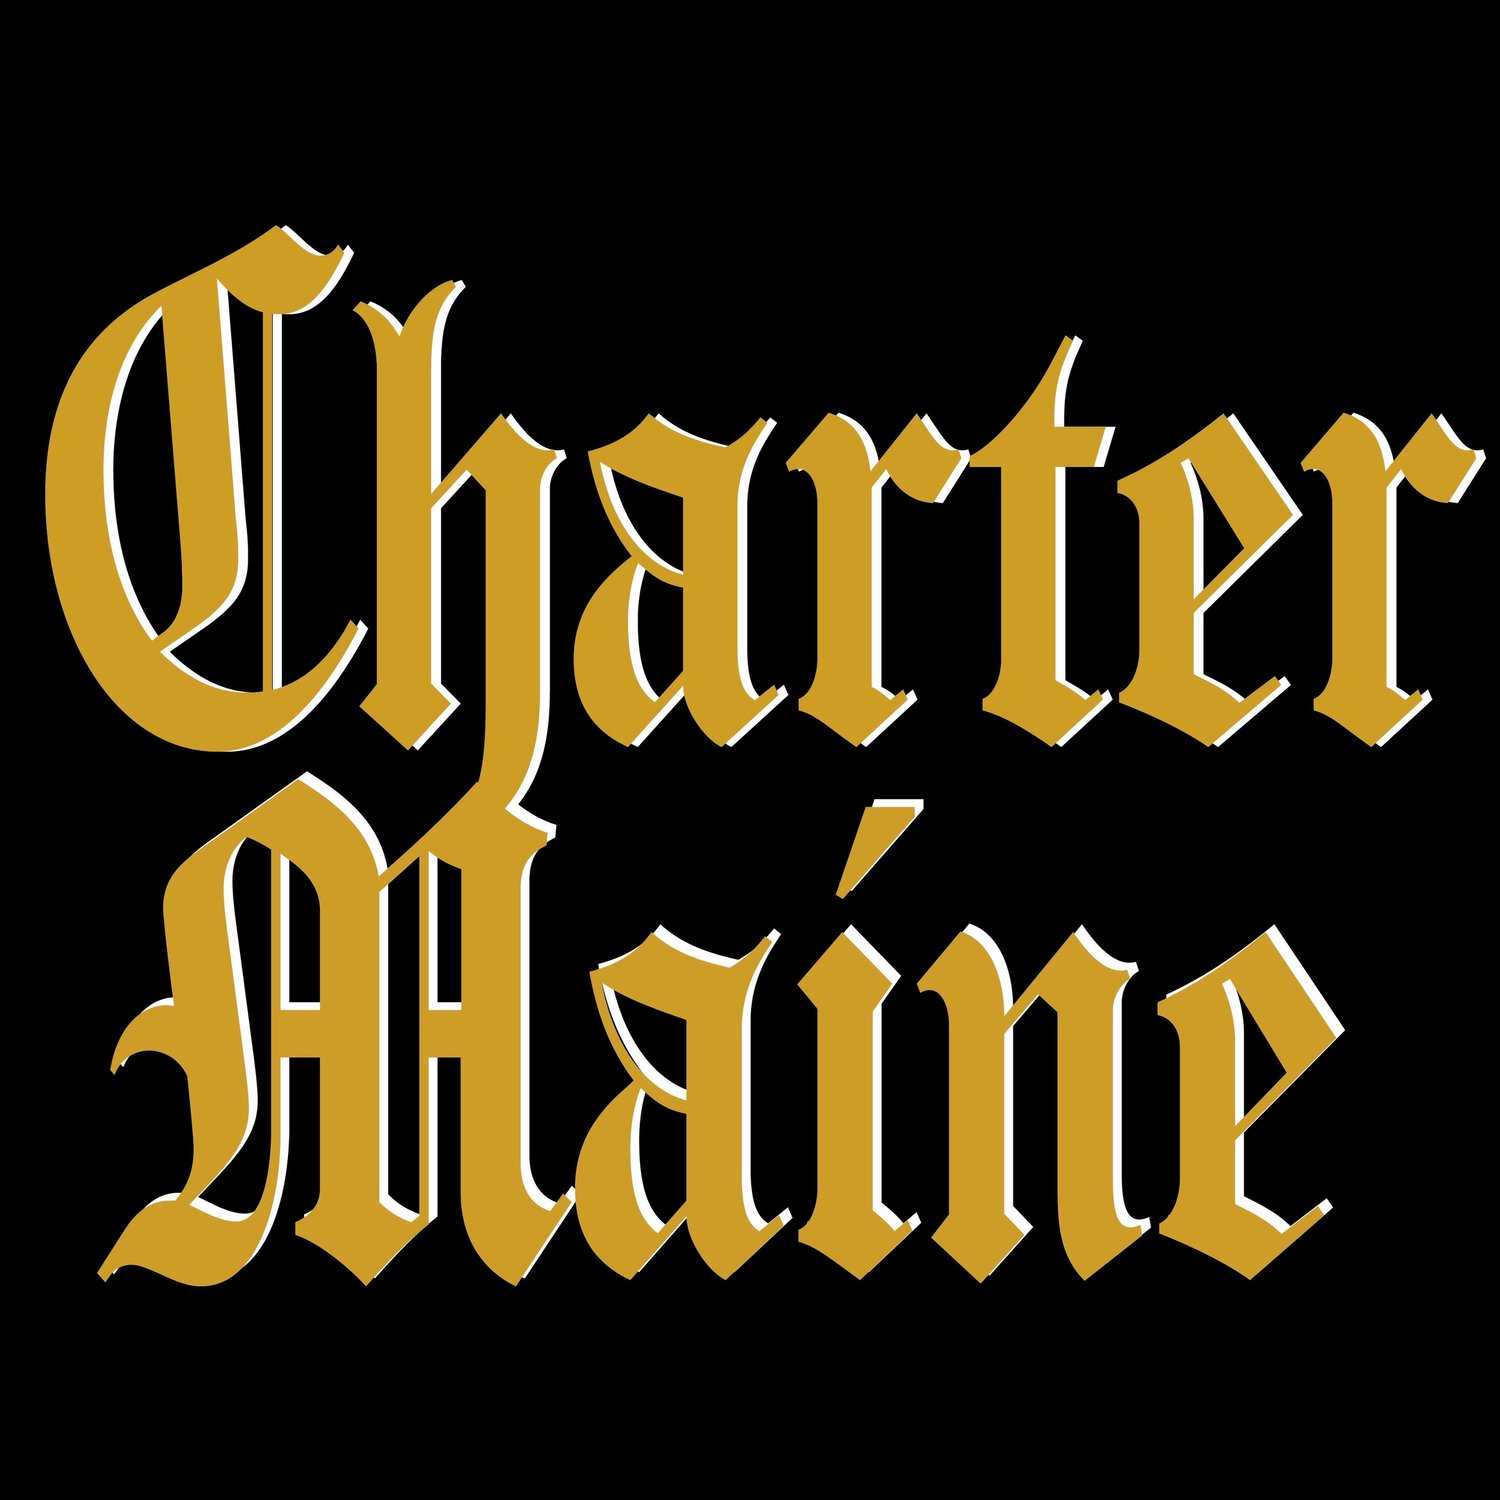 Charter Maine